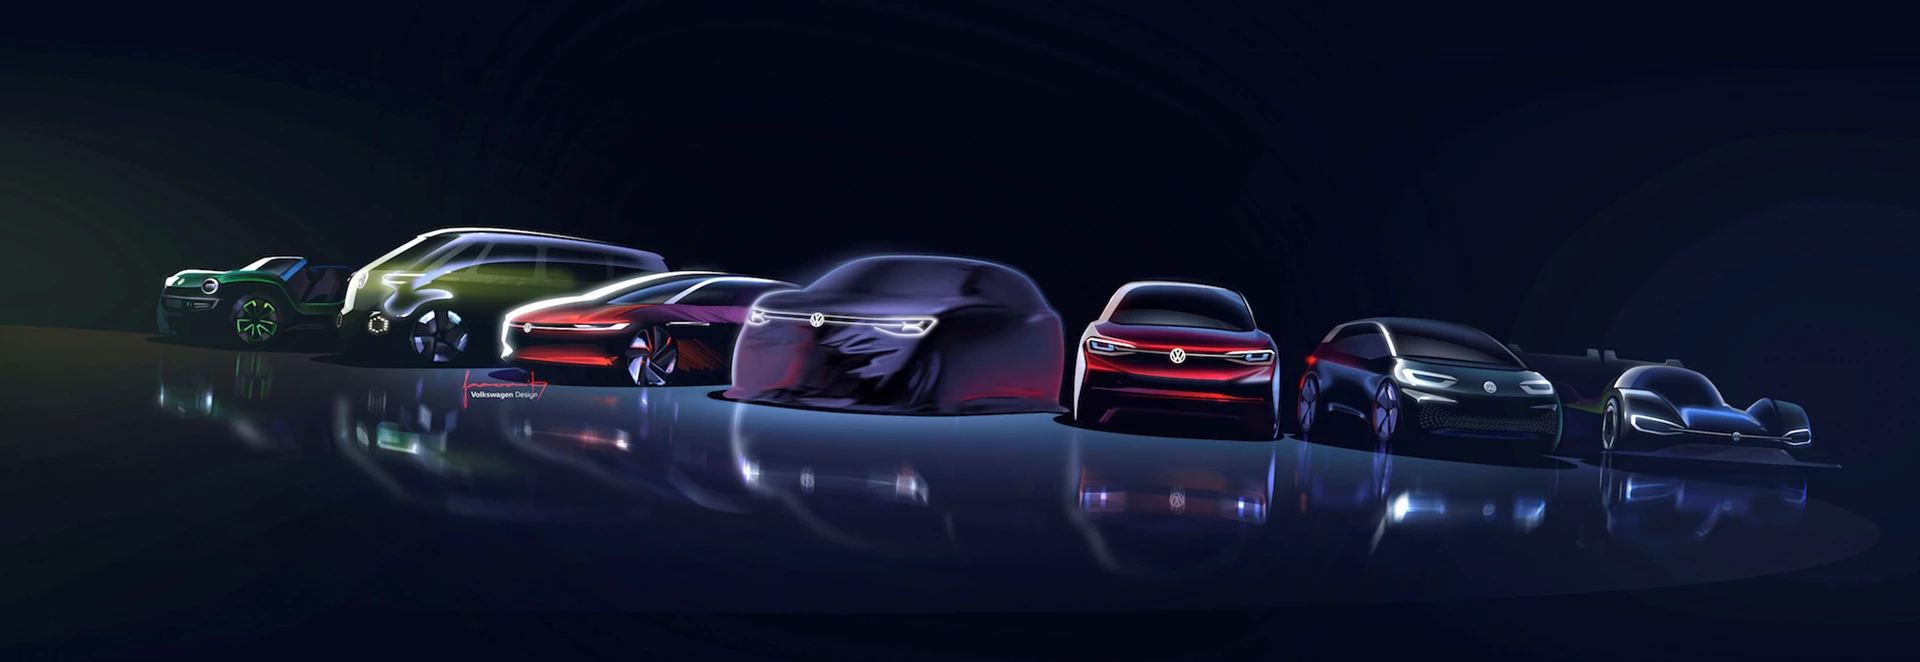 Volkswagen’s future electric concept vehicles